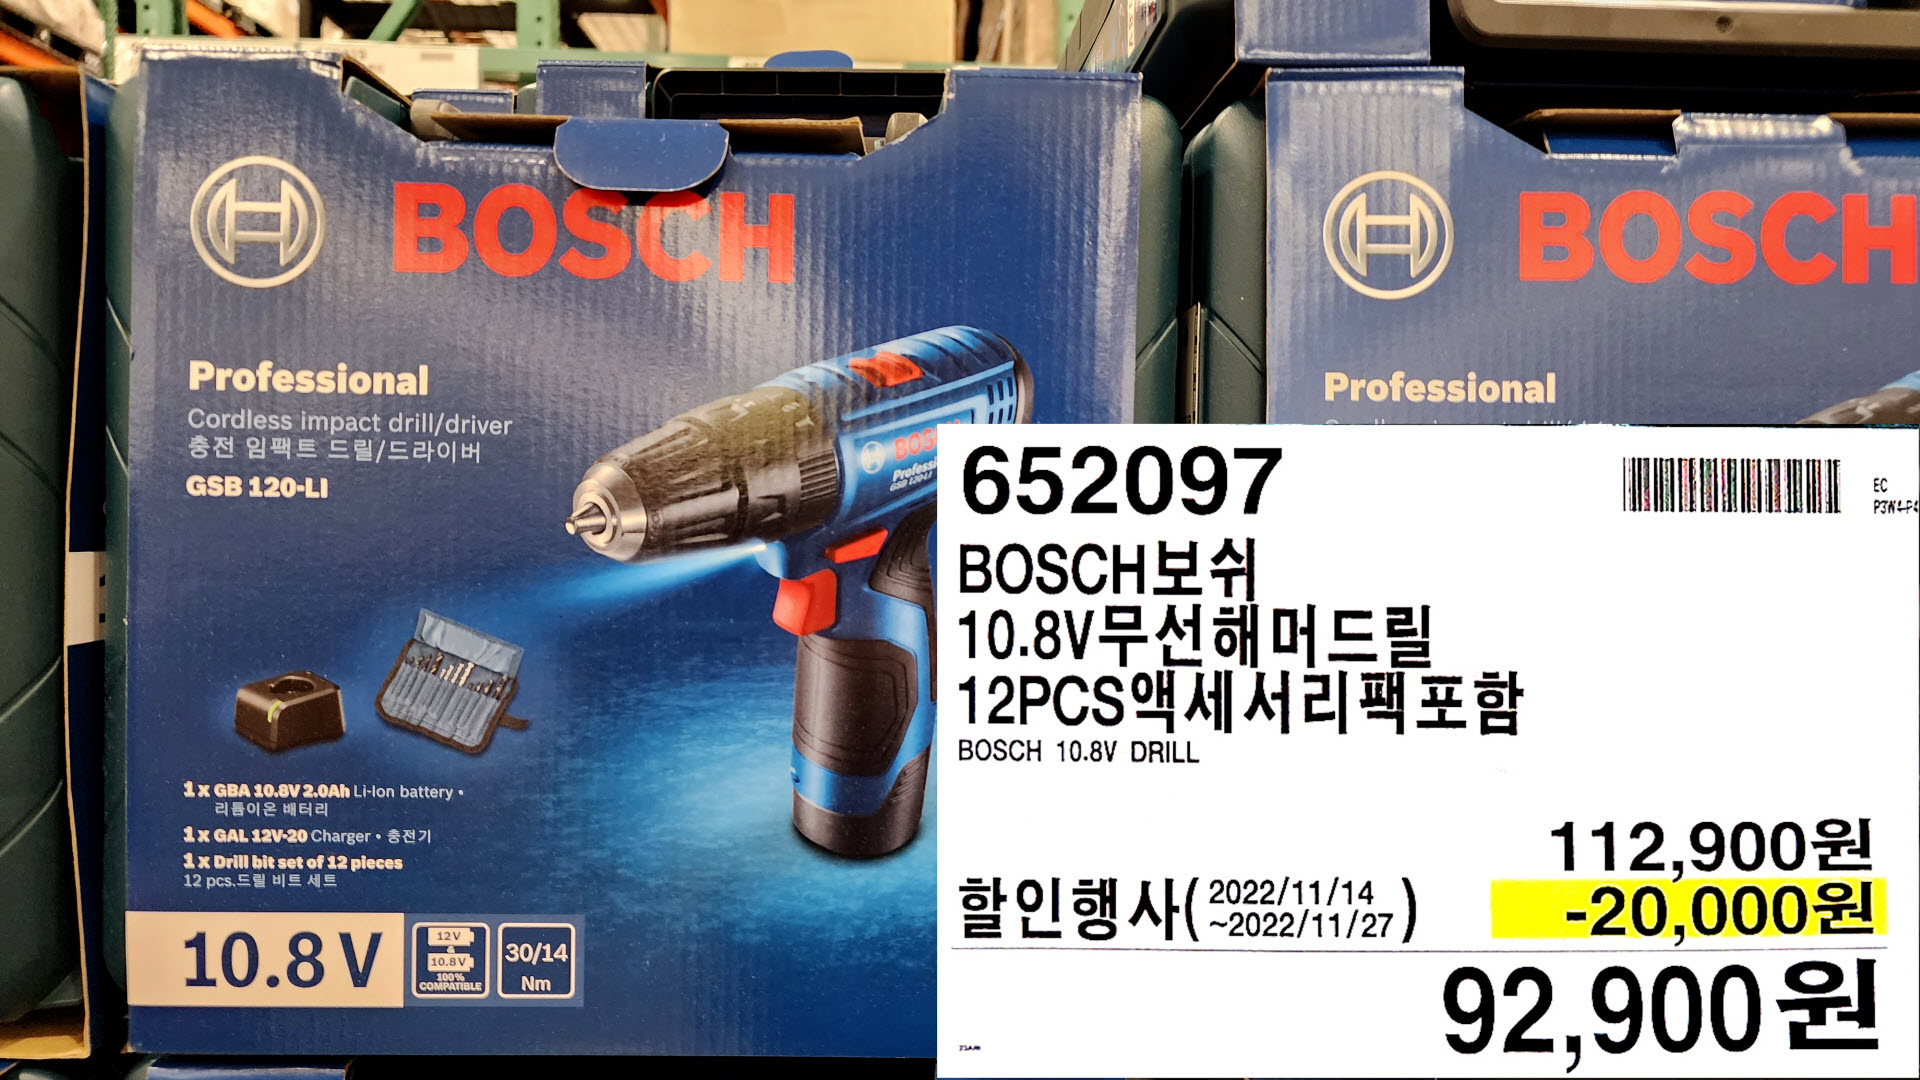 BOSCH보쉬
10.8V무선해머드릴
12PCS액세서리팩포함
BOSCH 10.8V DRILL
92&#44;900원